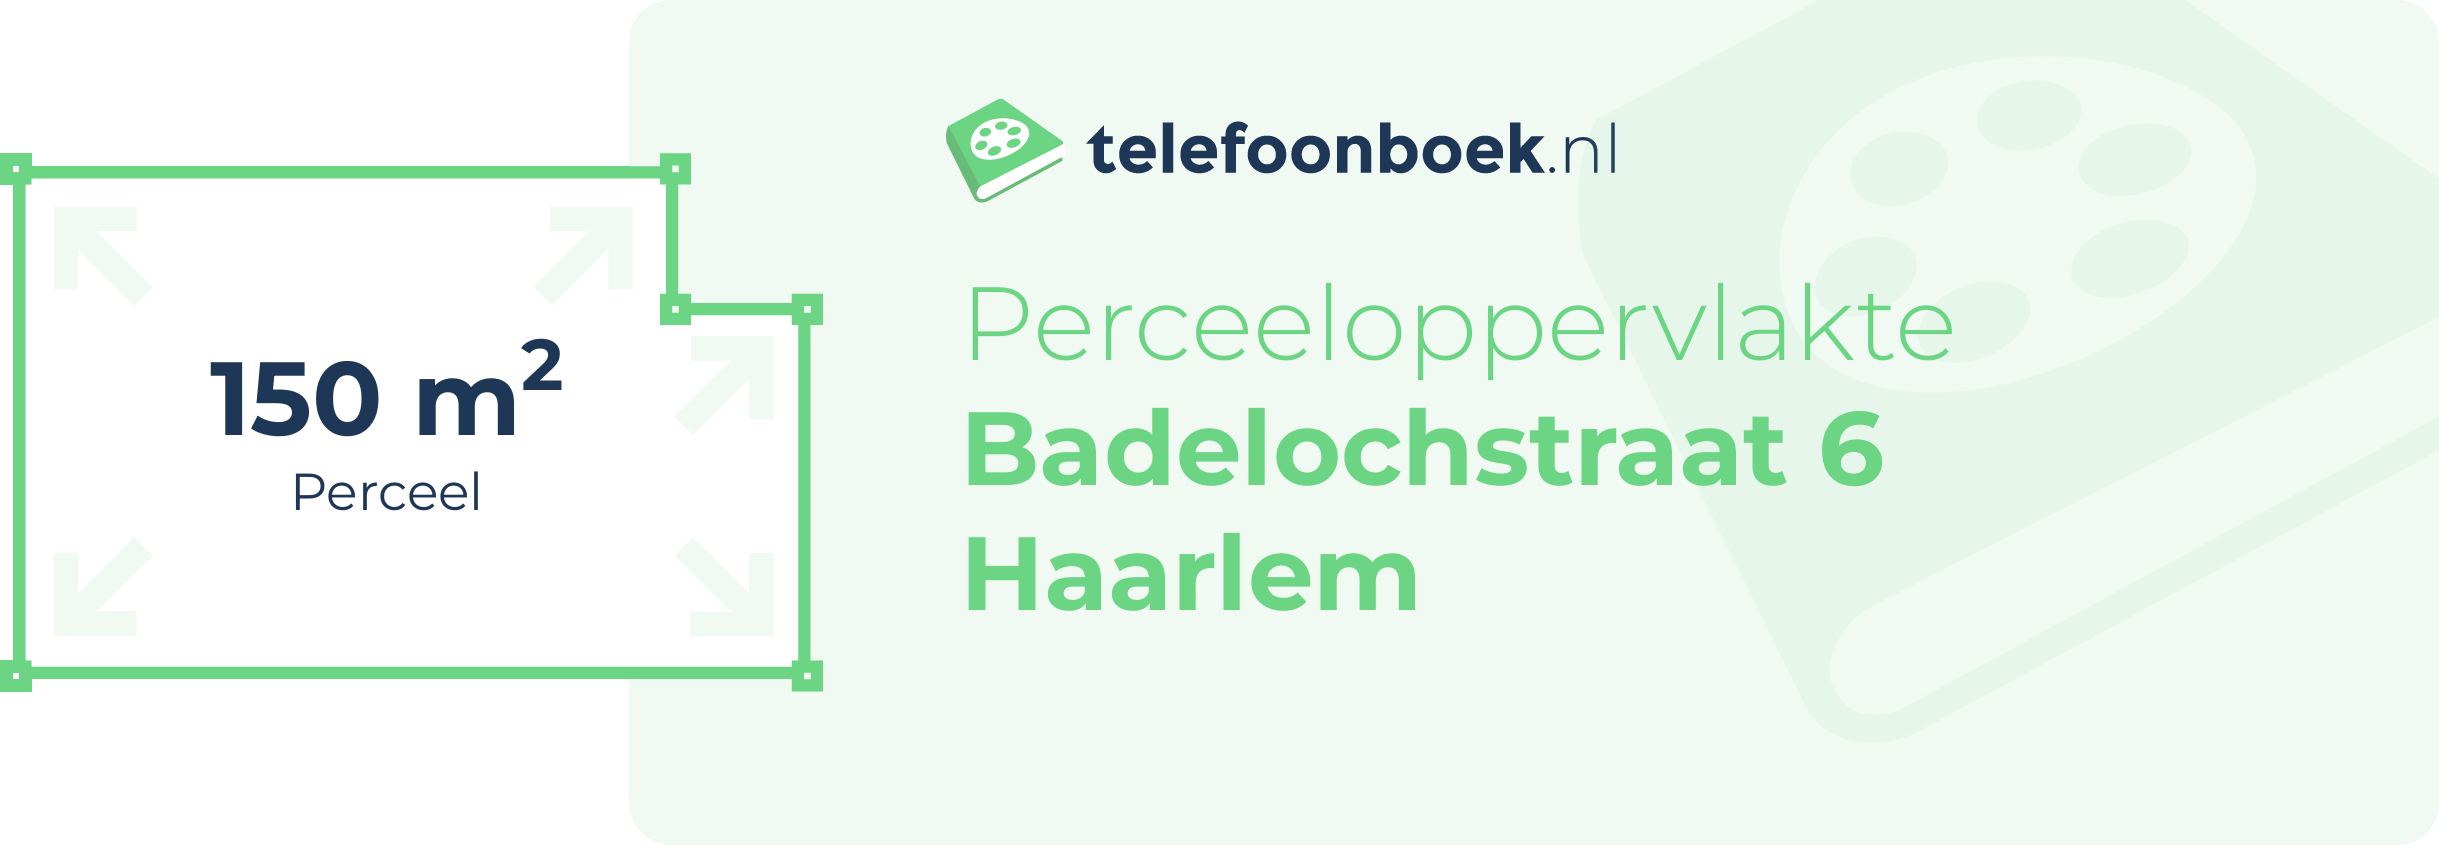 Perceeloppervlakte Badelochstraat 6 Haarlem